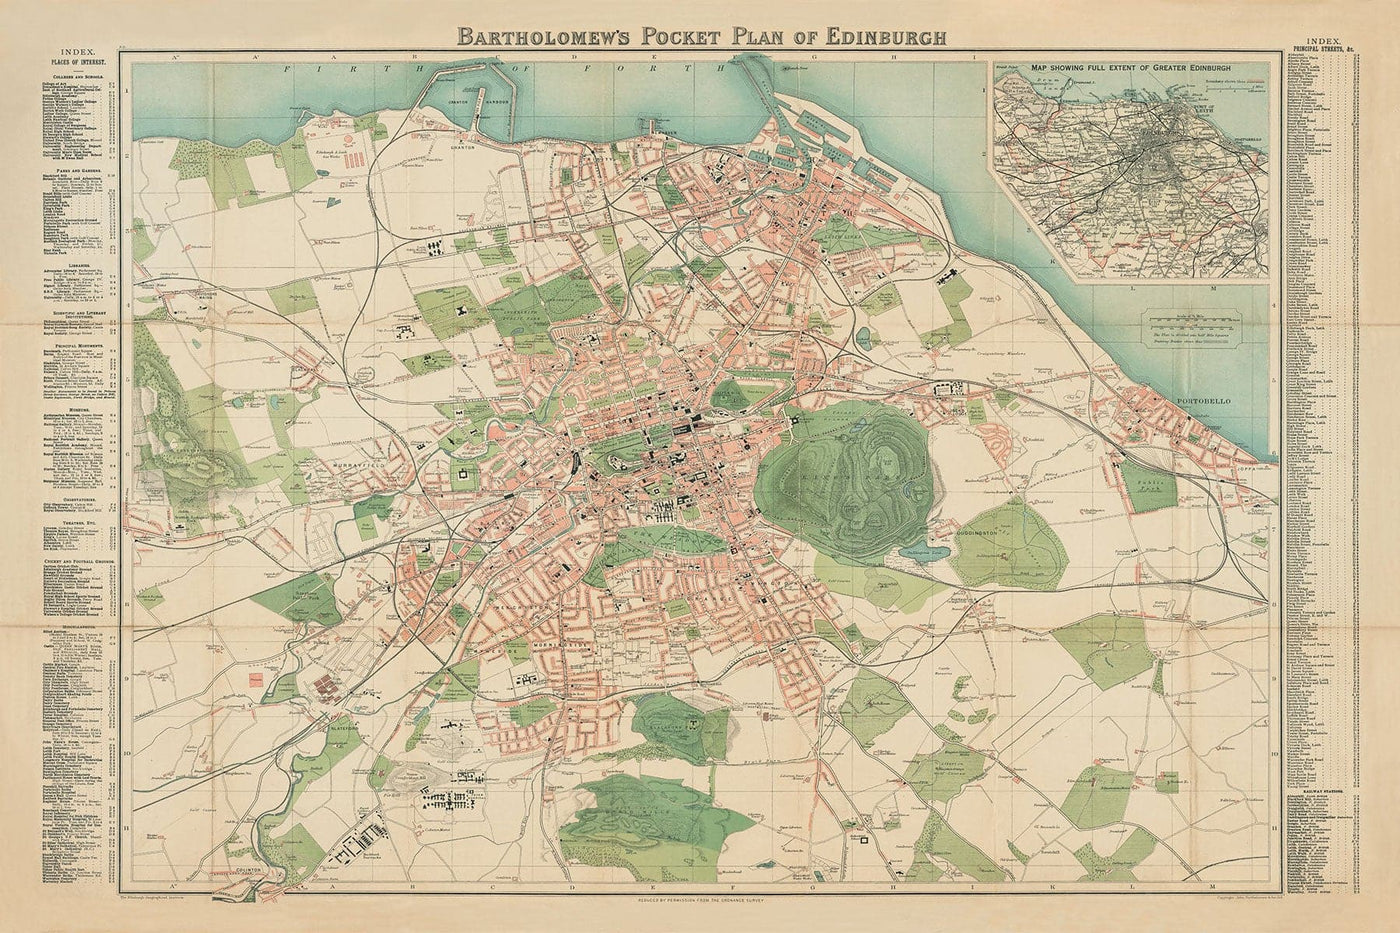 Ancienne carte rare d'Edimbourg - Plan de poche de Bartholomew, 1921 - Leith, Murrayfield, Portobello, Morningside